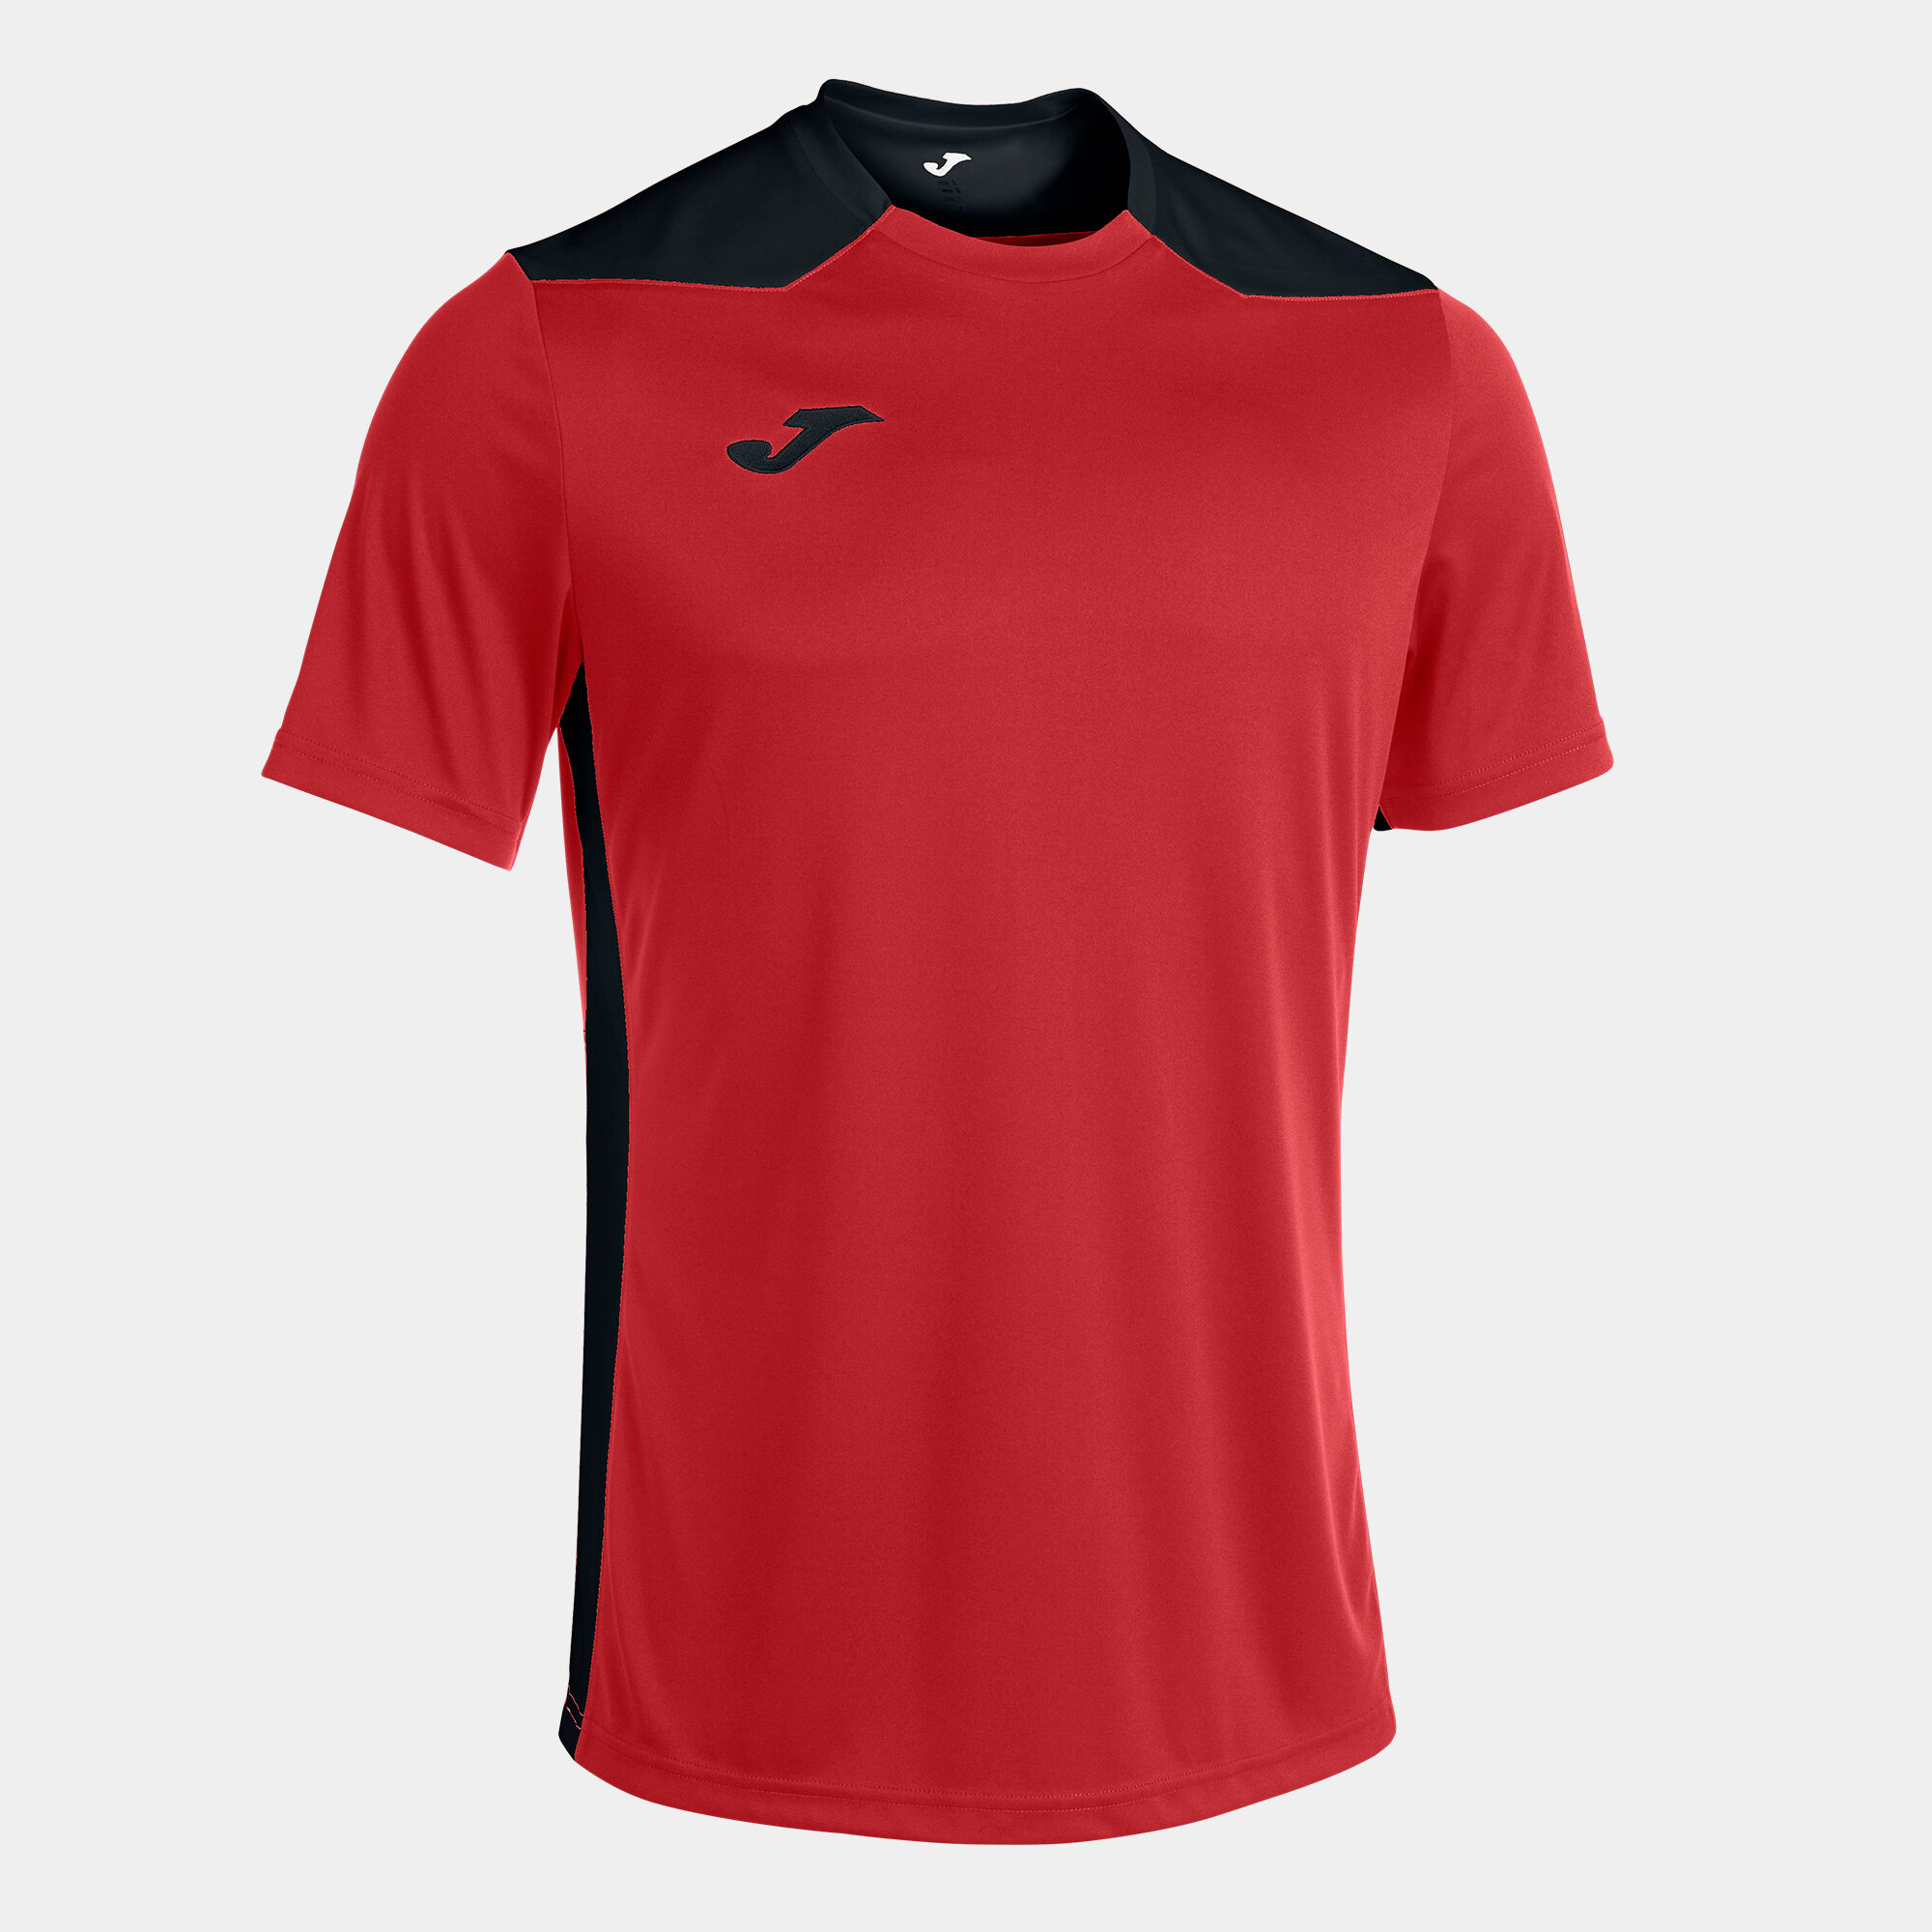 Shirt short sleeve man Championship VI red black